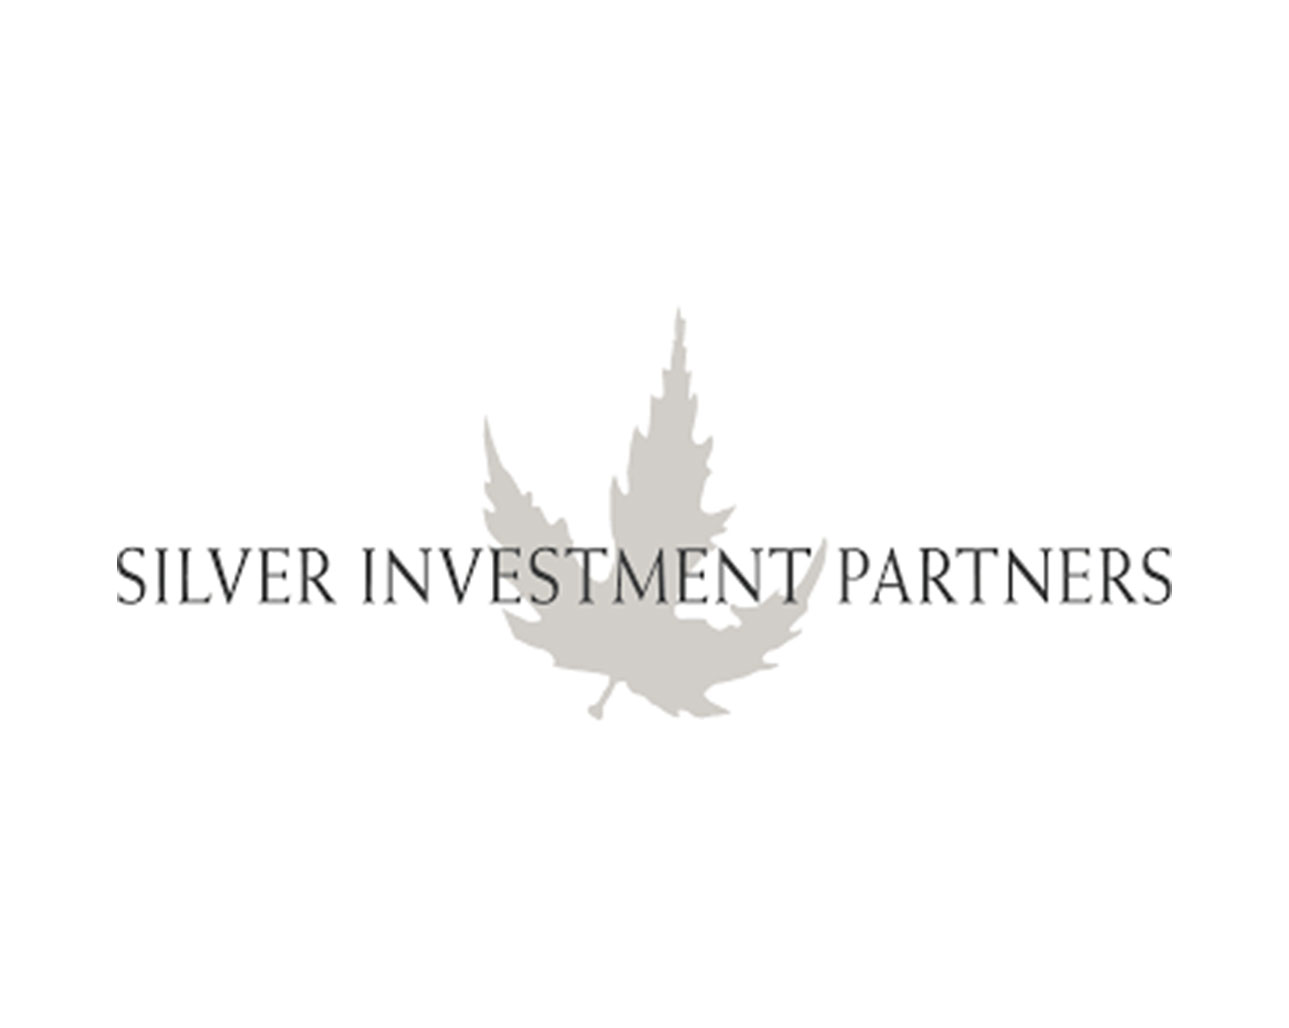 Silver Investment Partners übernimmt CryLaS